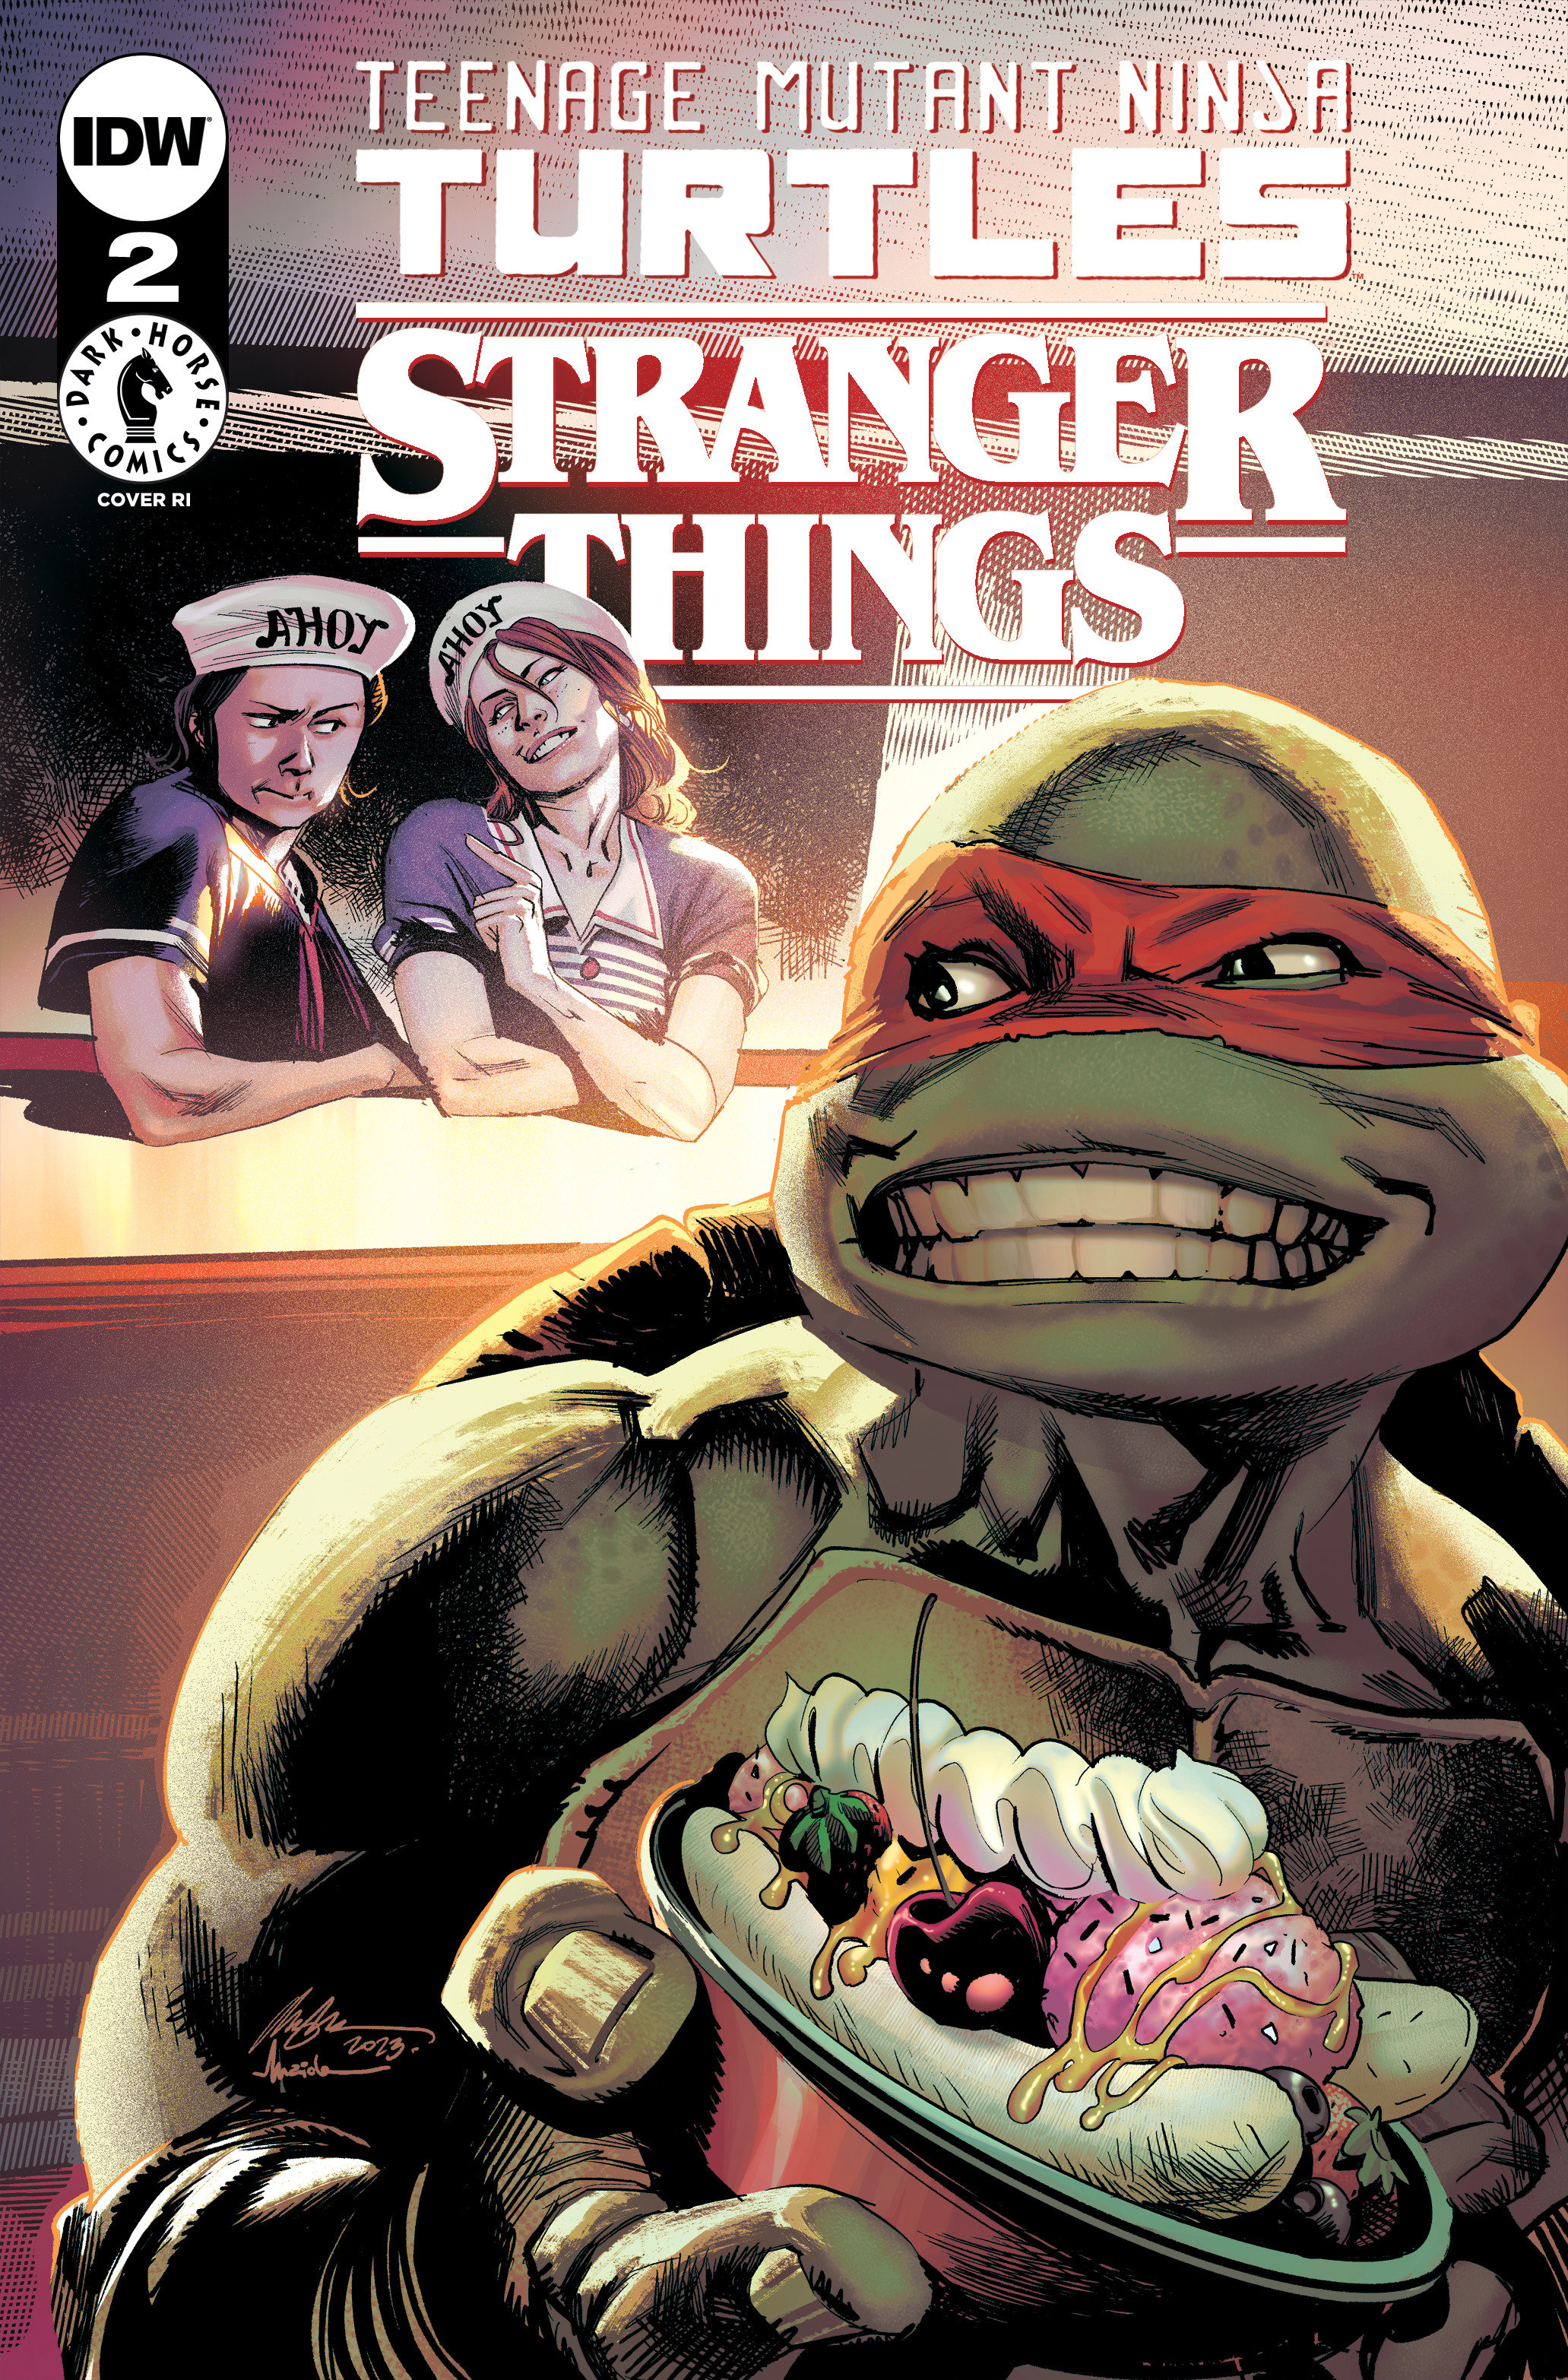 Teenage Mutant Ninja Turtles X Stranger Things #2 Albuquerque 1 for 50 Incentive